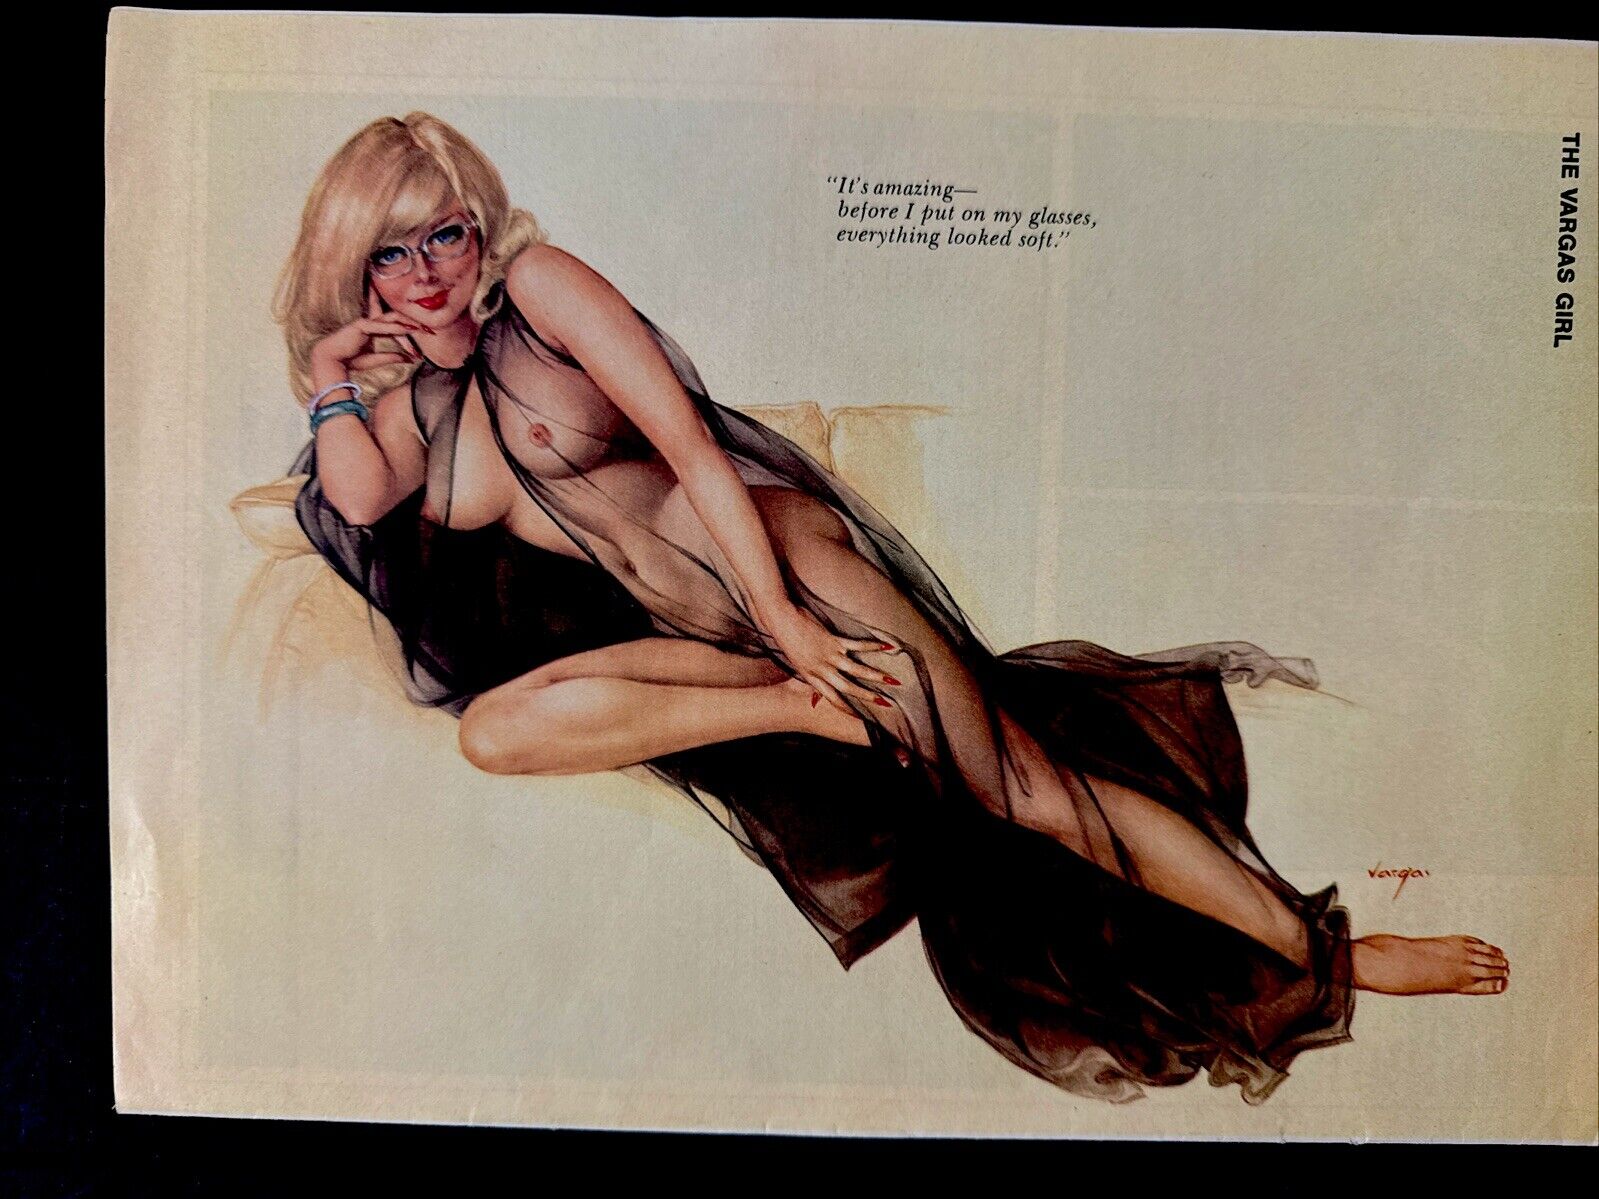 VARGAS GIRL Sexy Pin-Up 1974 Playboy Print Blonde Wearing Glasses